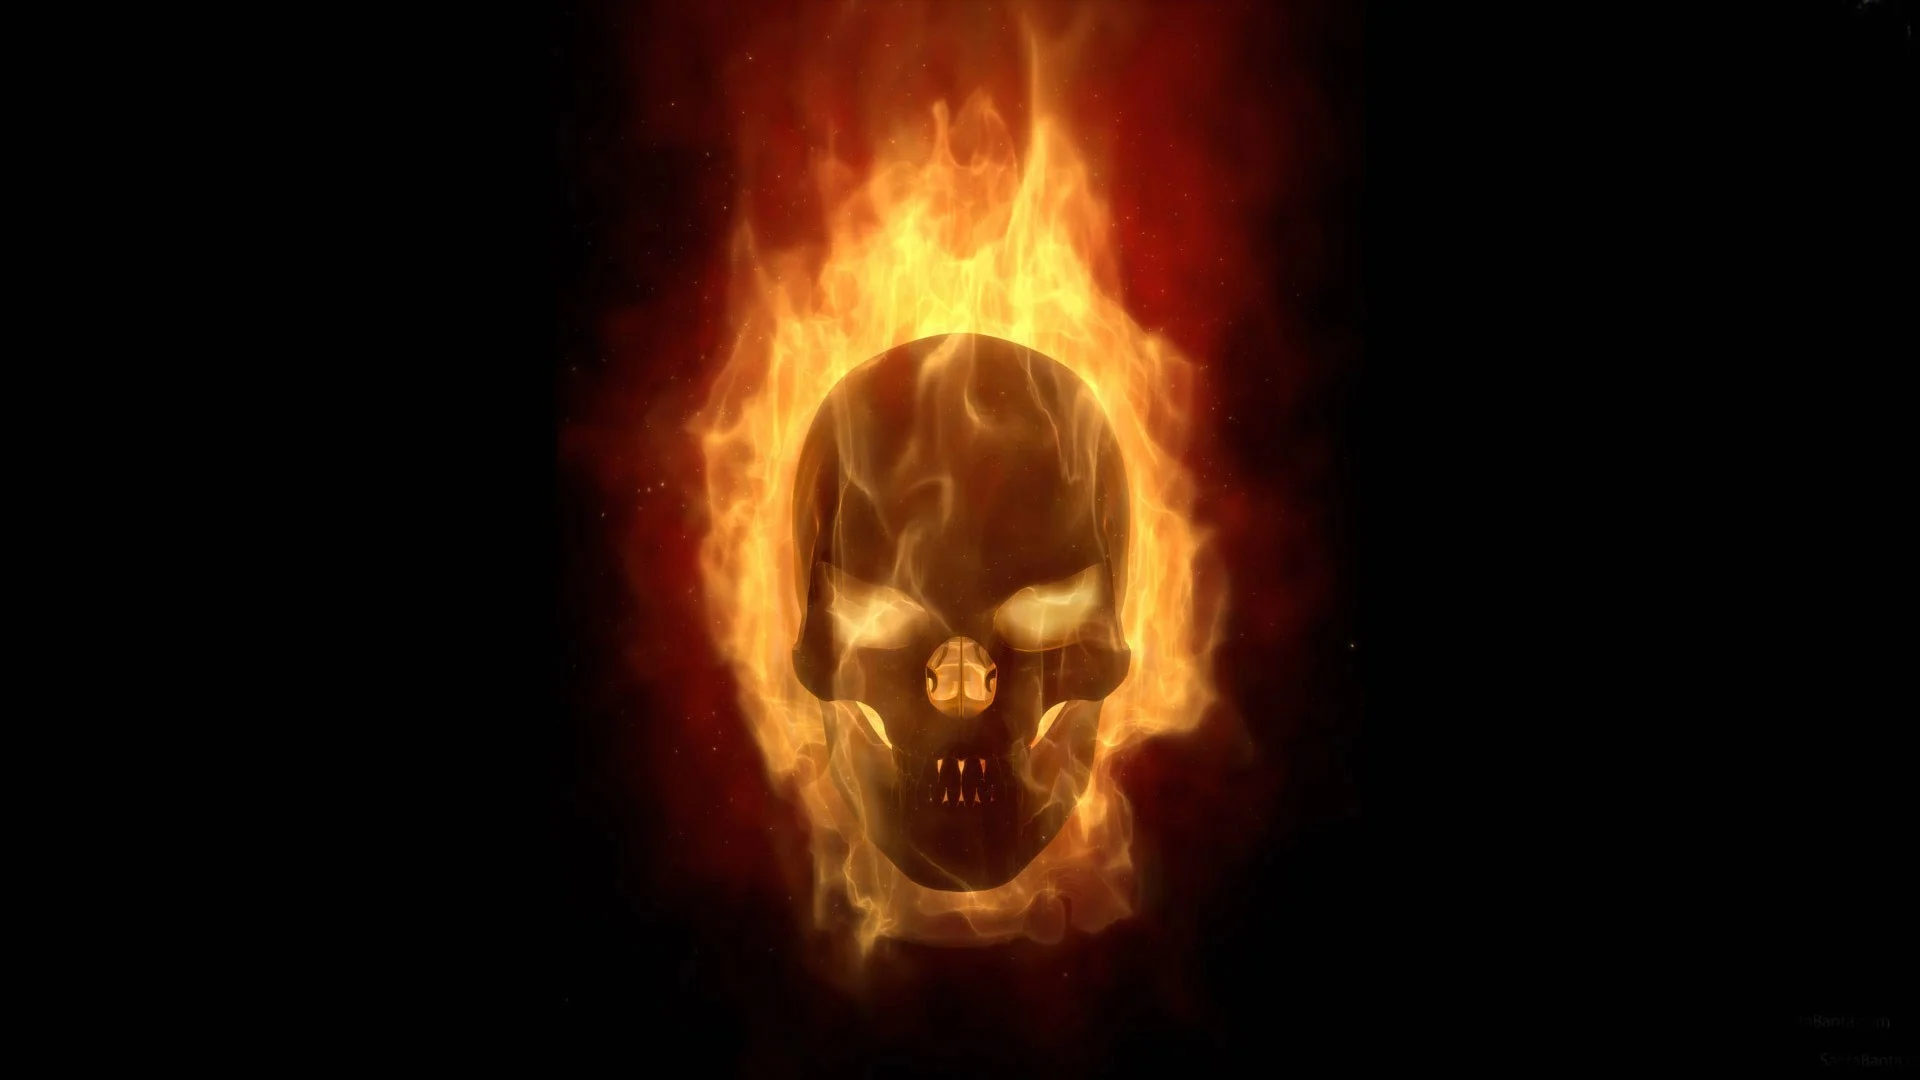 Hd wallpapers skull on fire